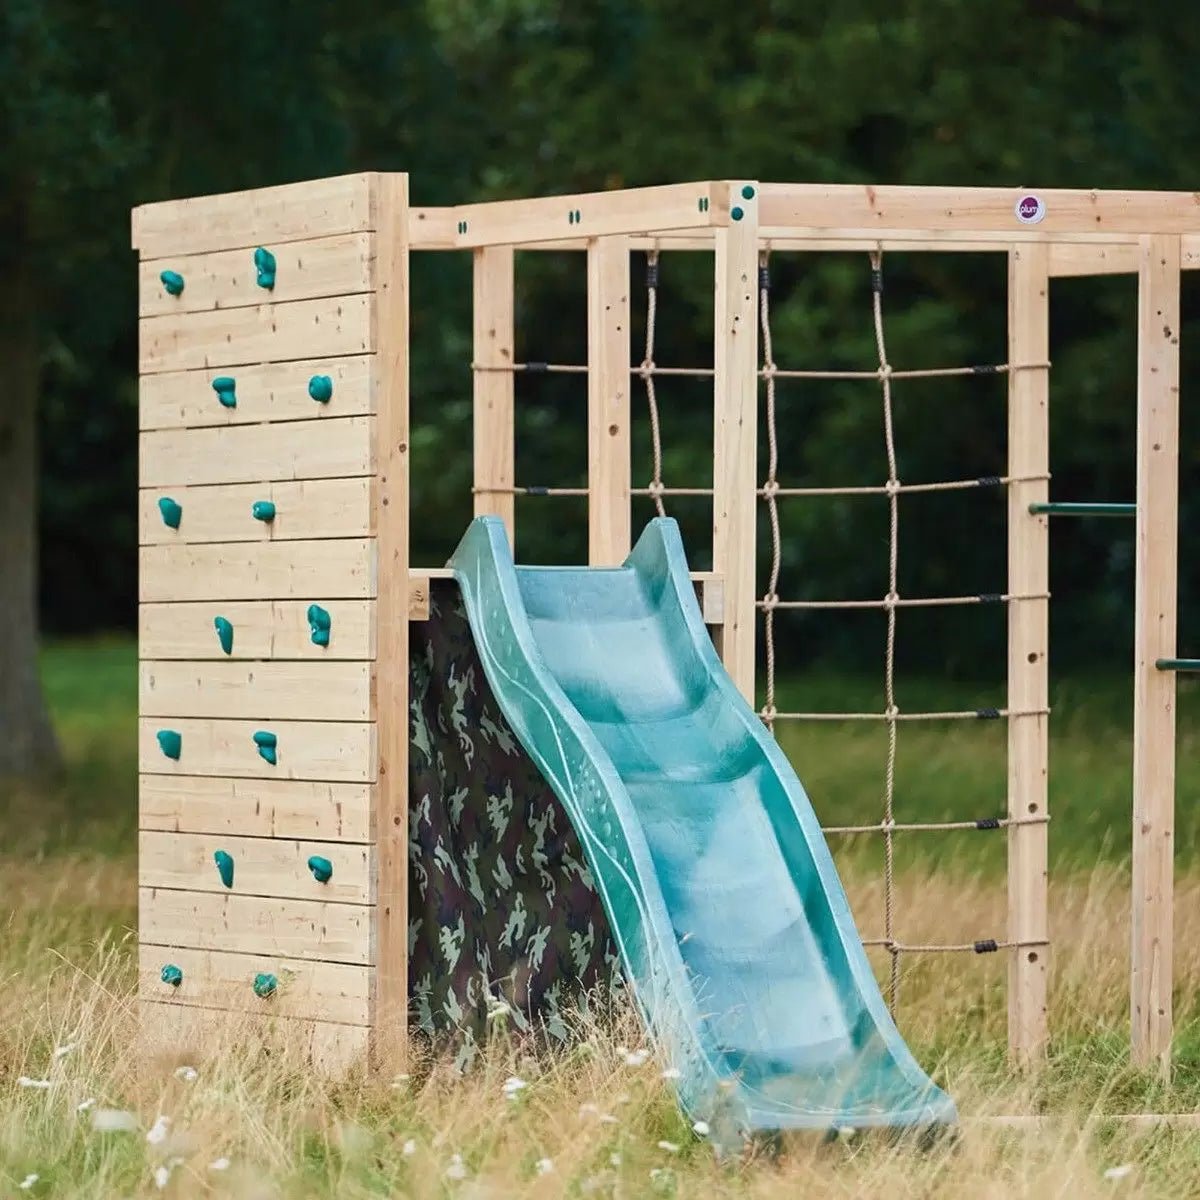 Active Outdoor Joy: Plum Climbing Cube for Kids' Imaginative Play